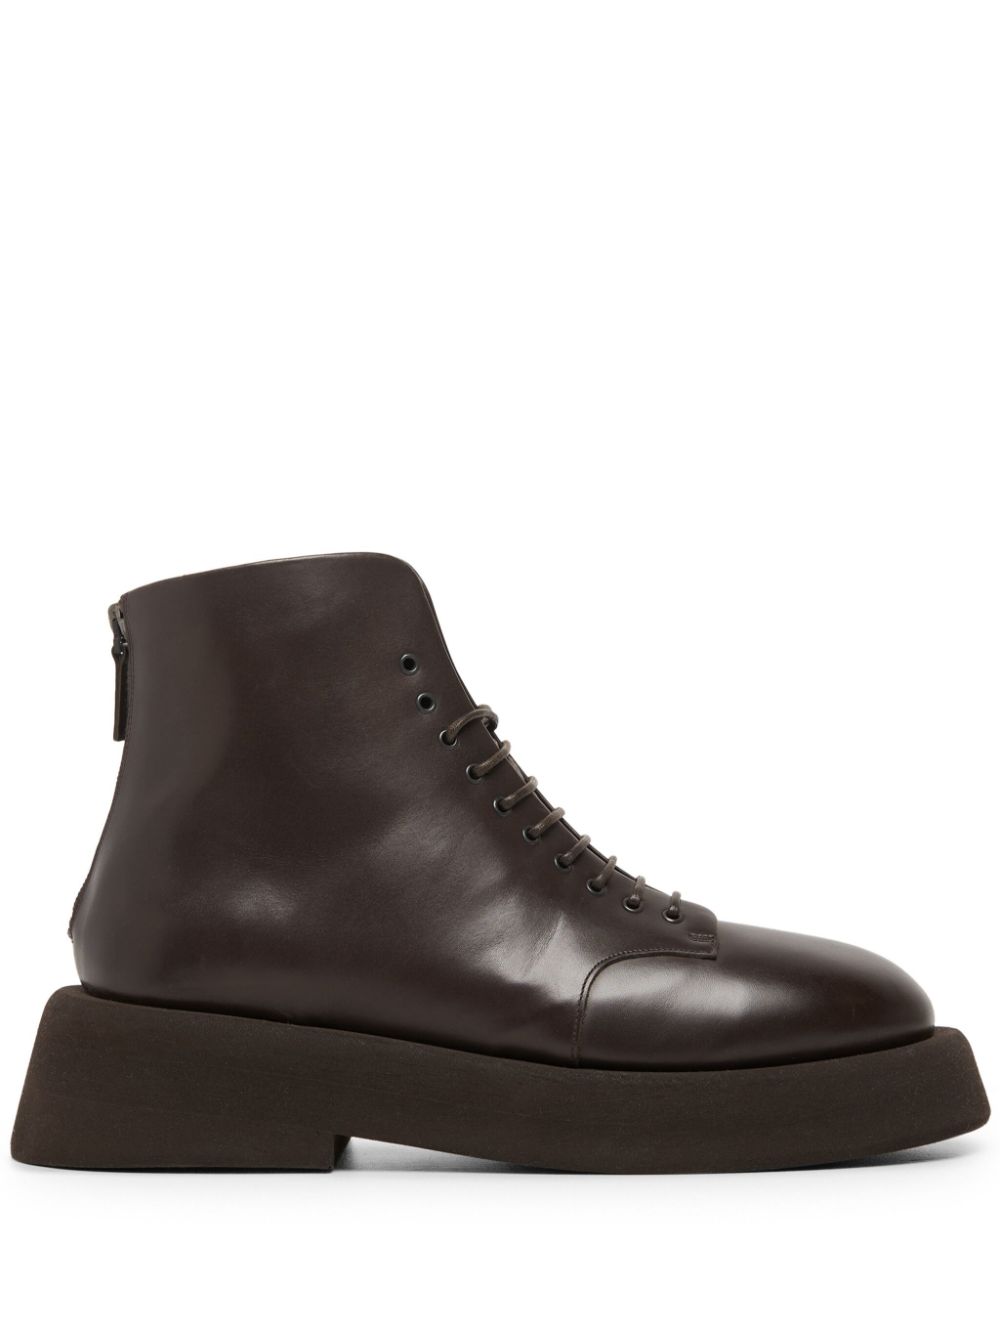 Marsèll Gommellone leather boots - Brown von Marsèll